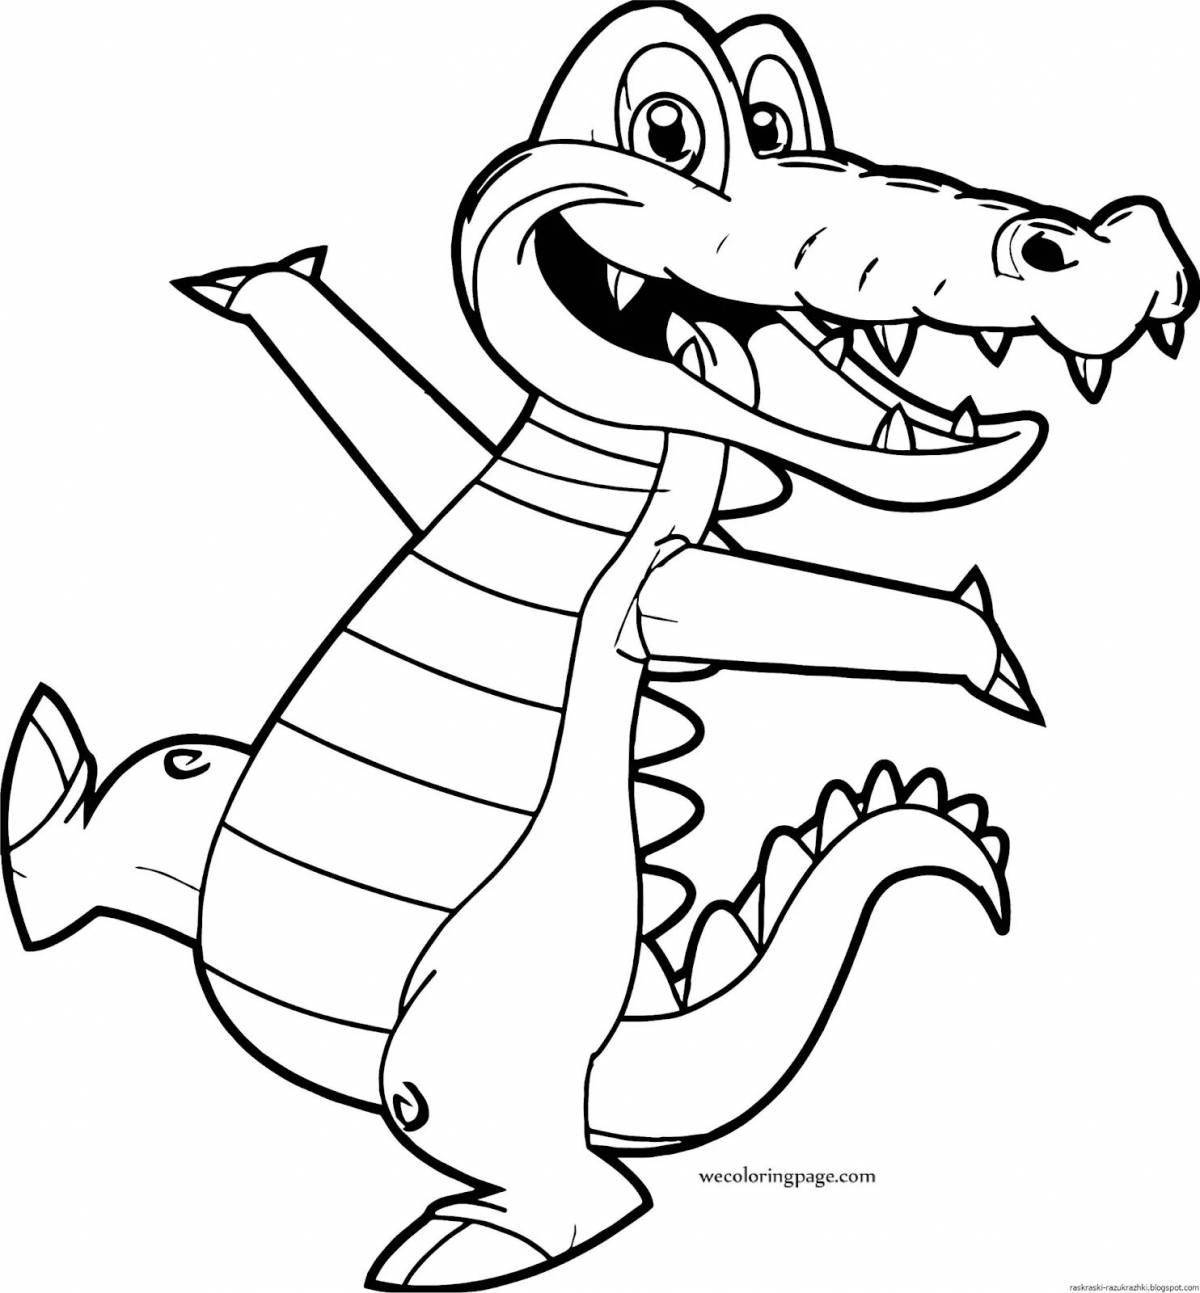 Crocodile drawing for kids #19